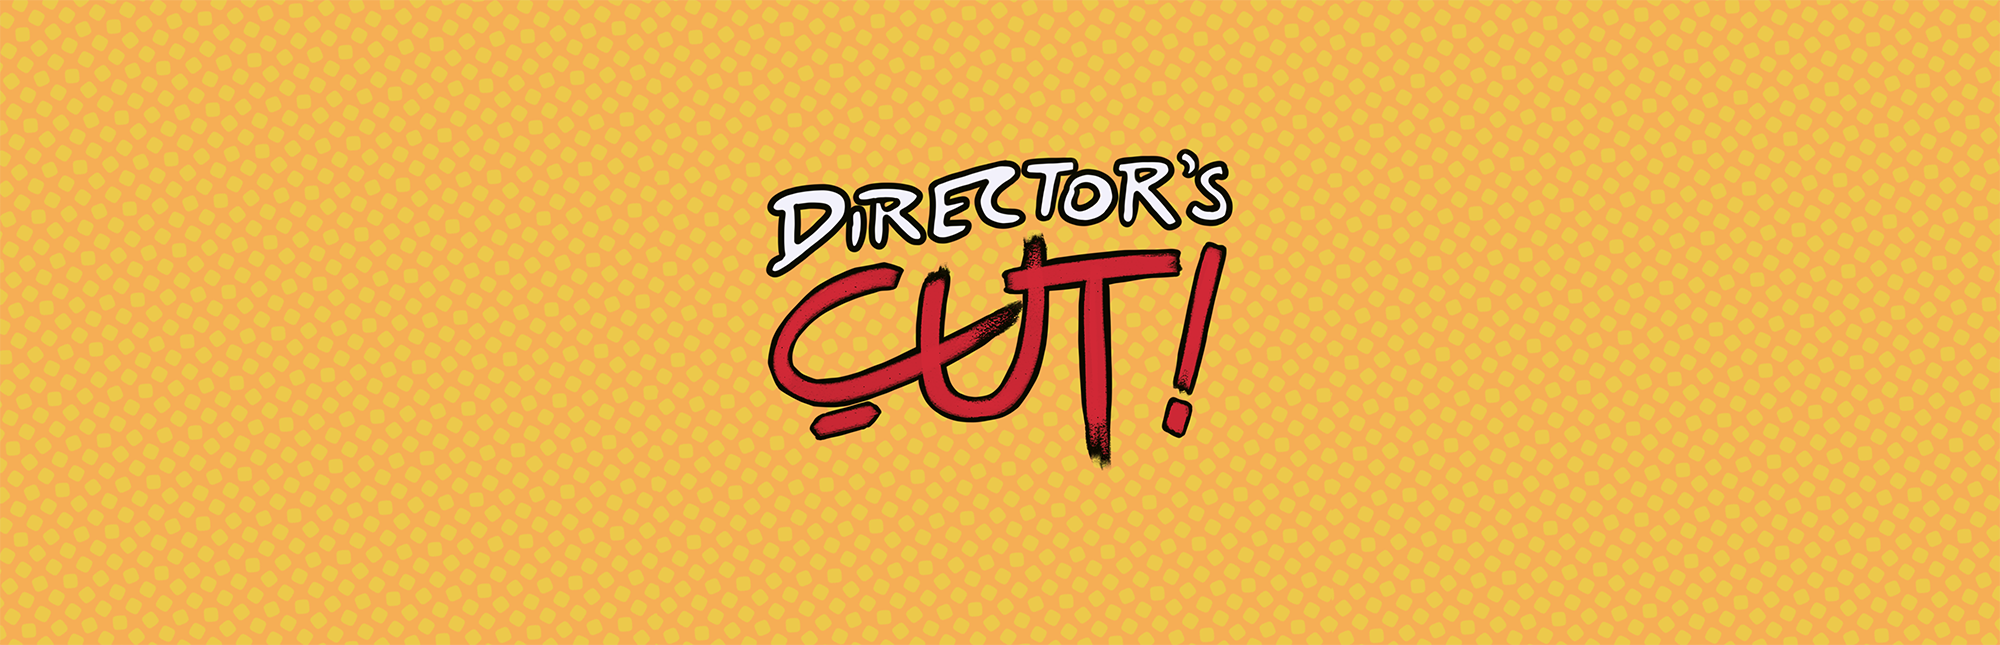 Director's CUT!